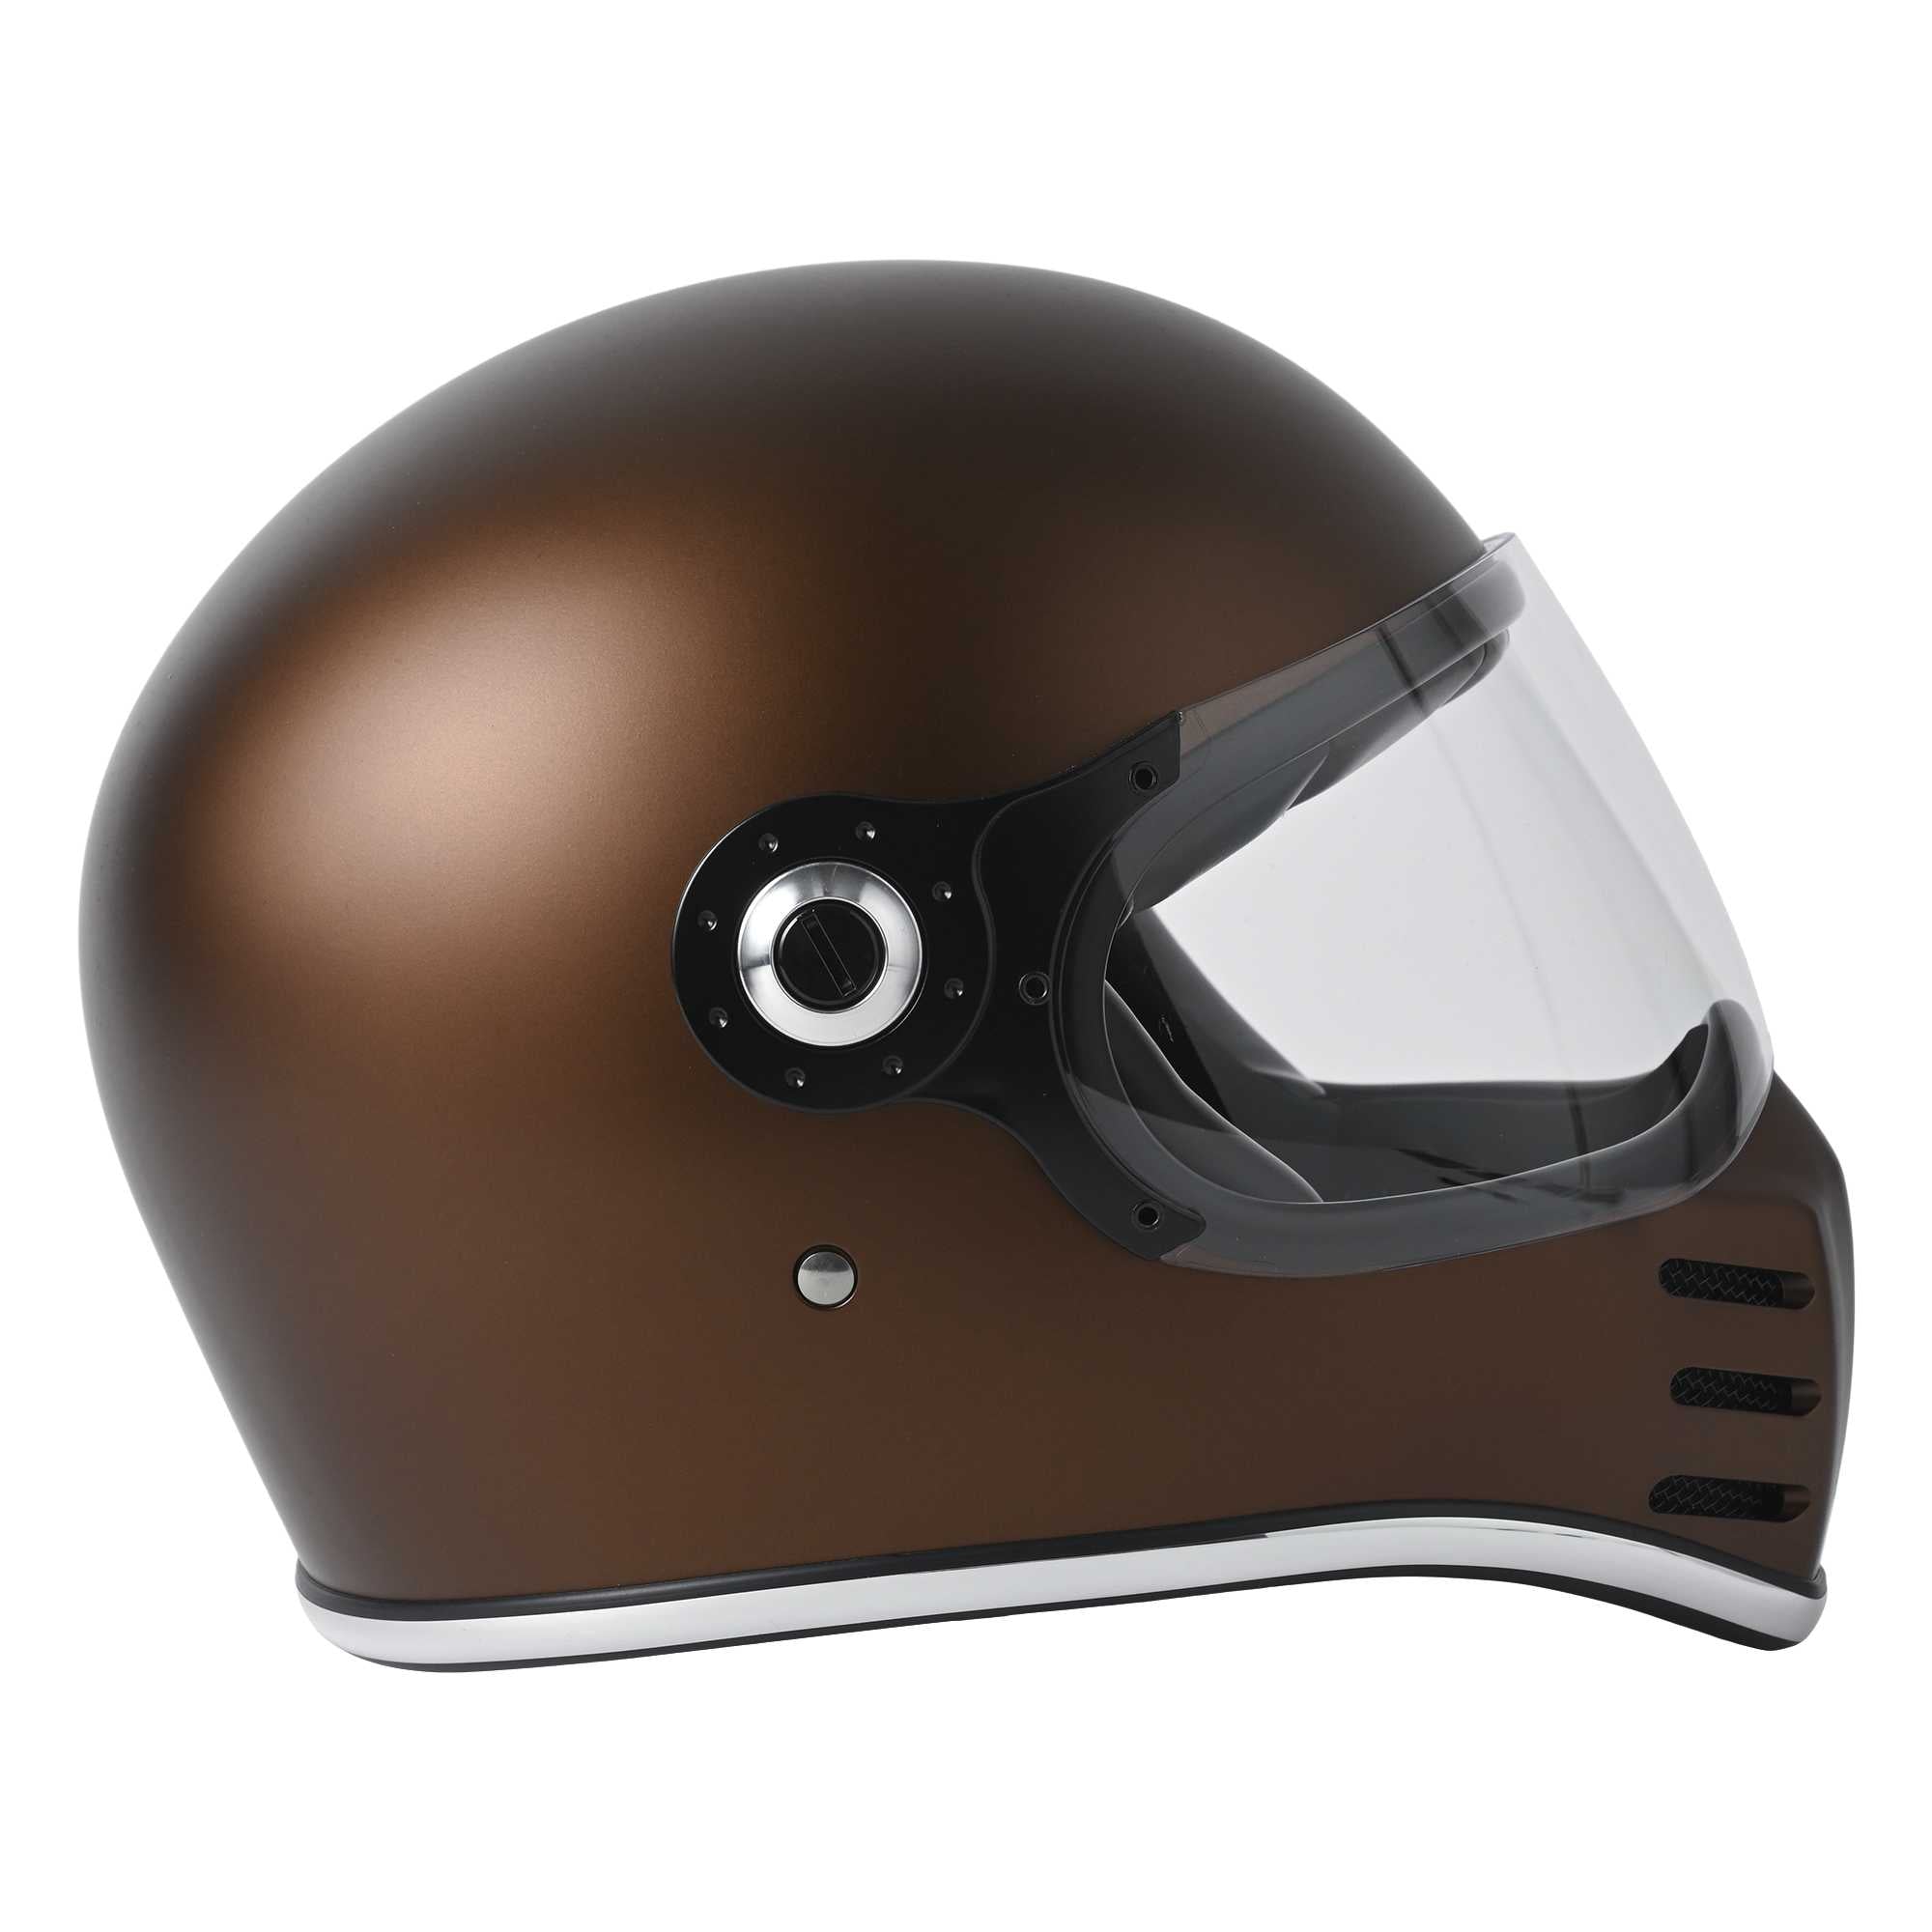 RIDEZ X HELMET Limited Quantity Model MATT BROWN Full Face Motorcycle Helmet 